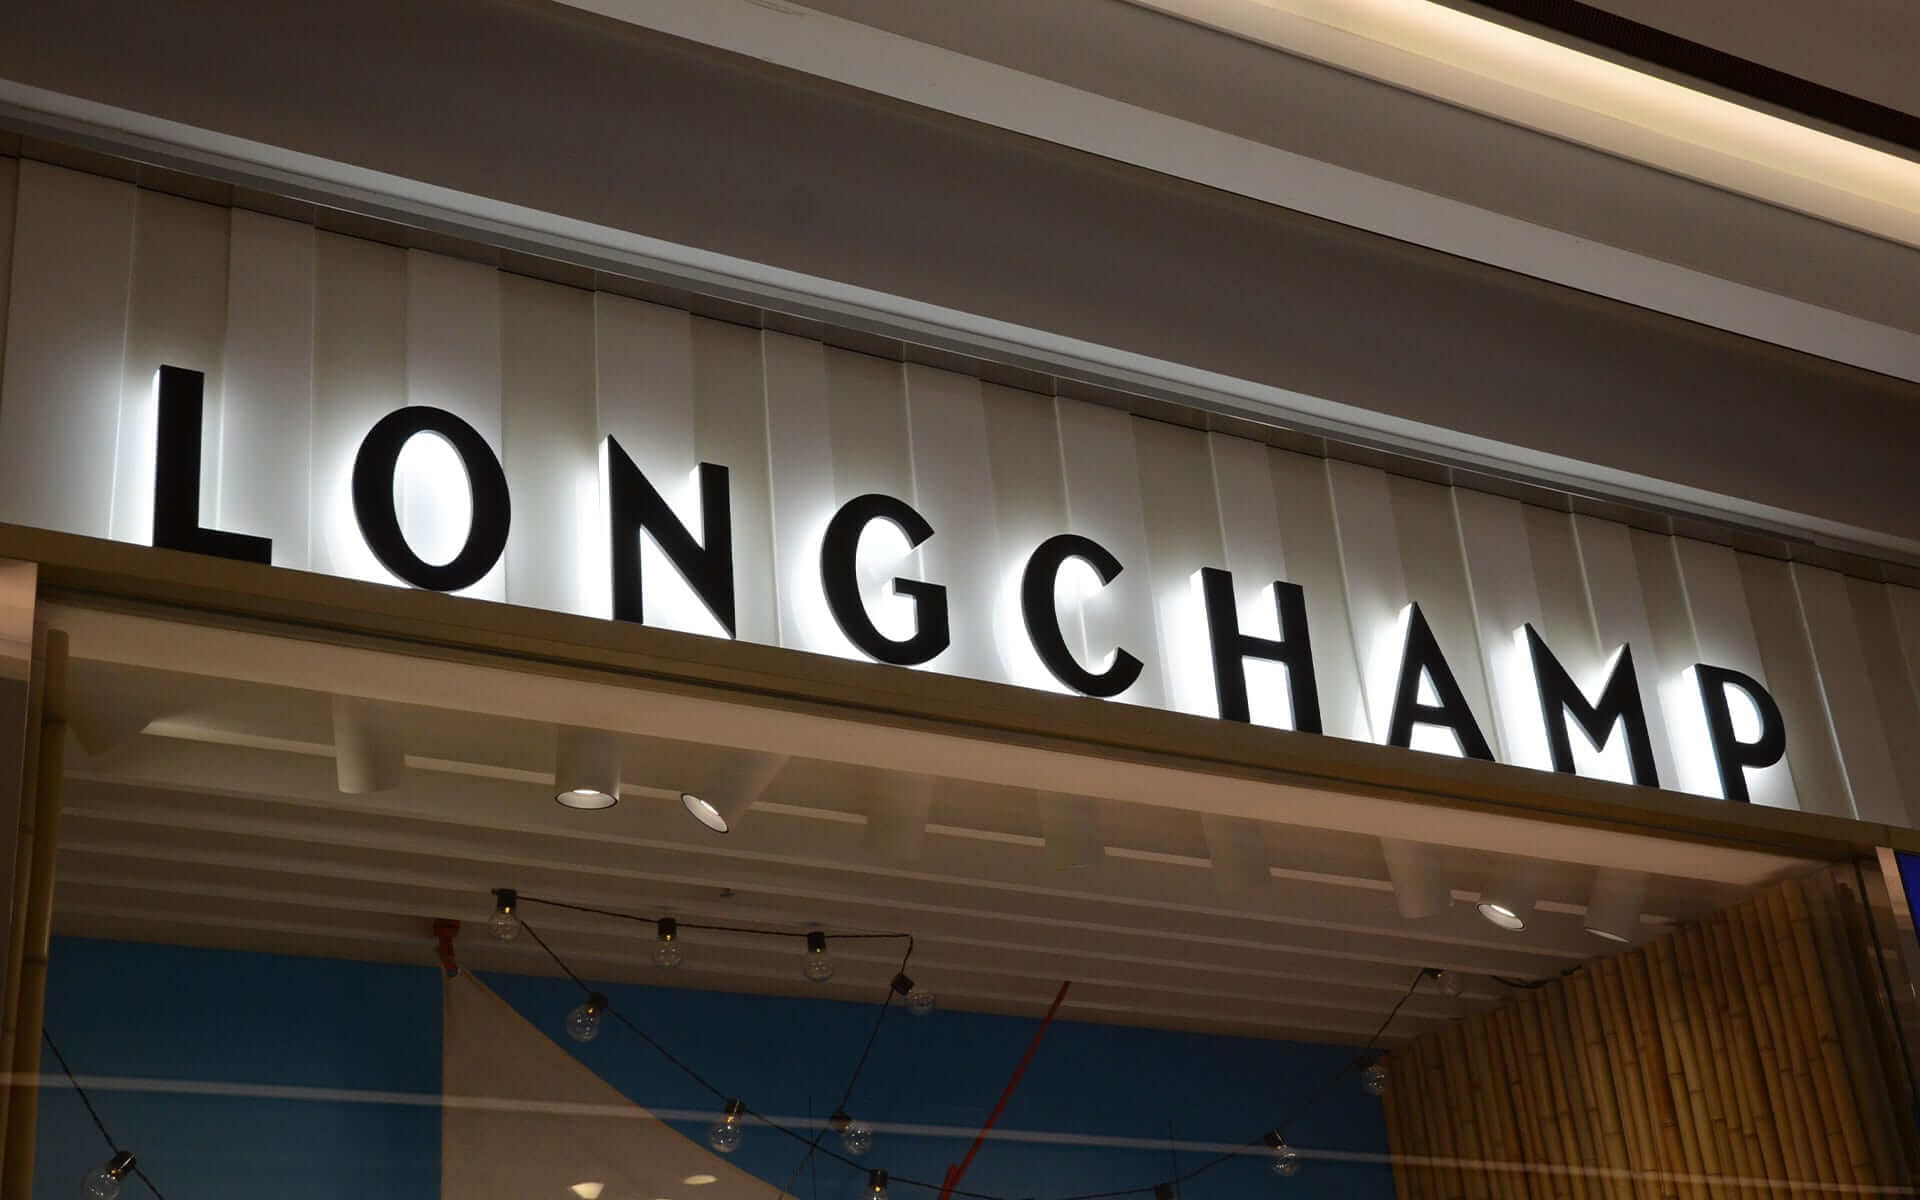 Side-lit Channel Letters for Longchamp